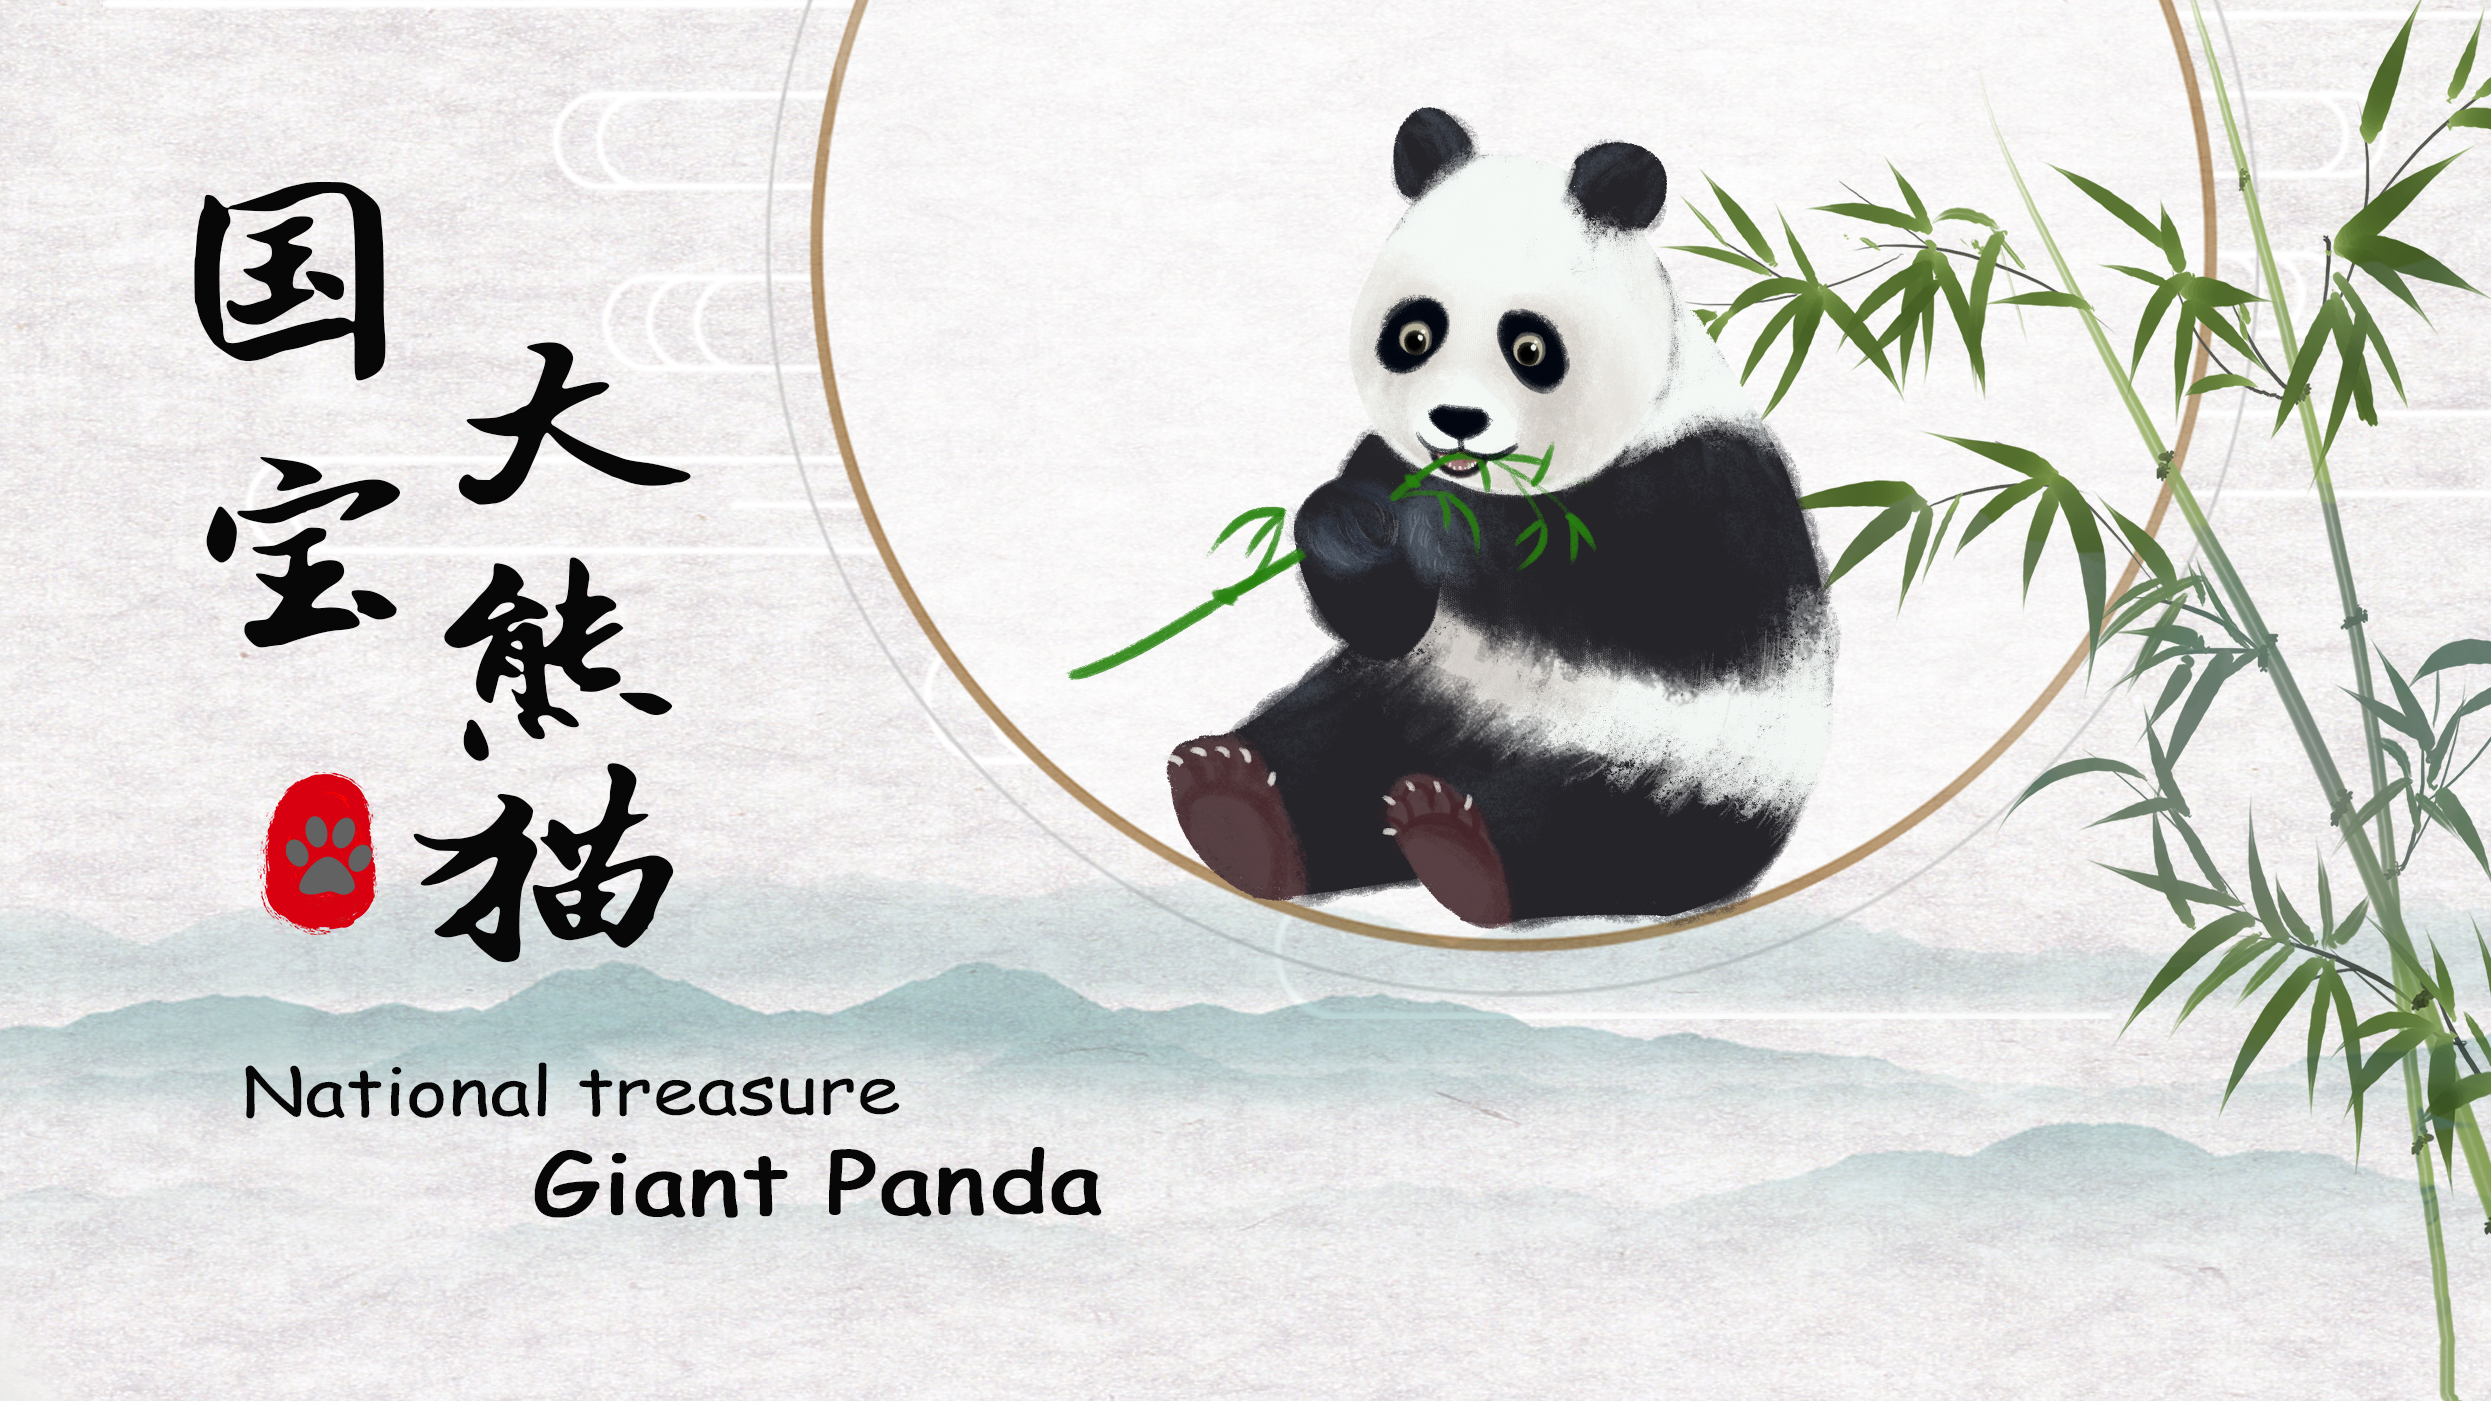 National Teasure: Giant Panda